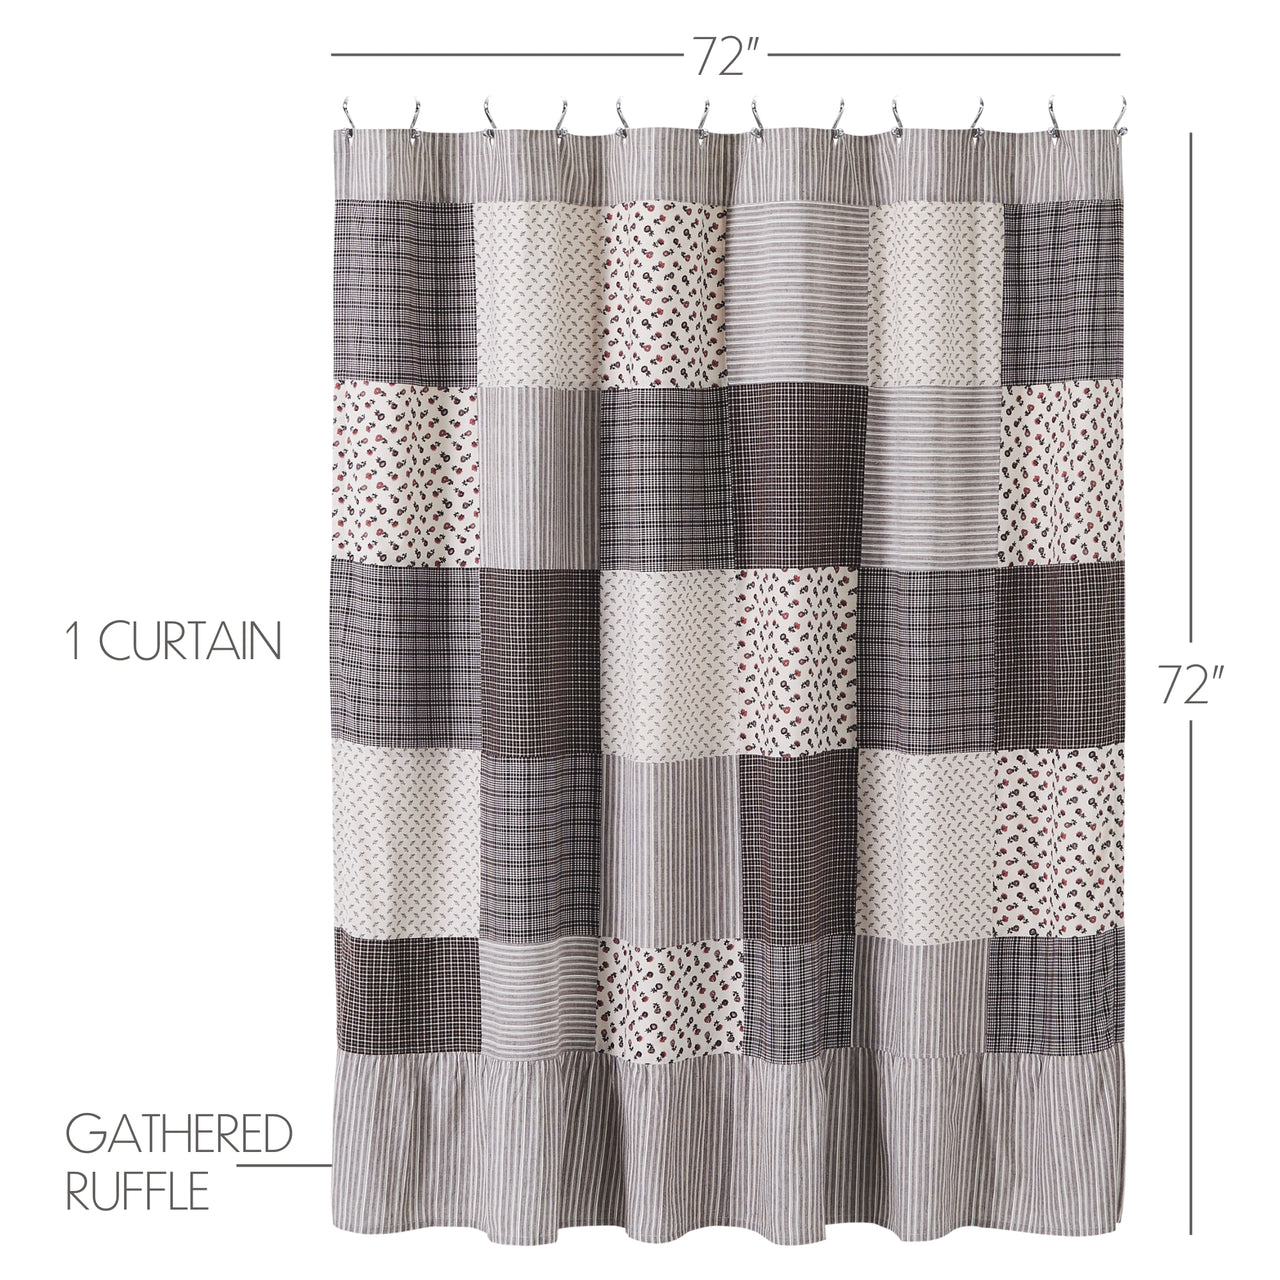 Florette Patchwork Shower Curtain 72x72" VHC Brands